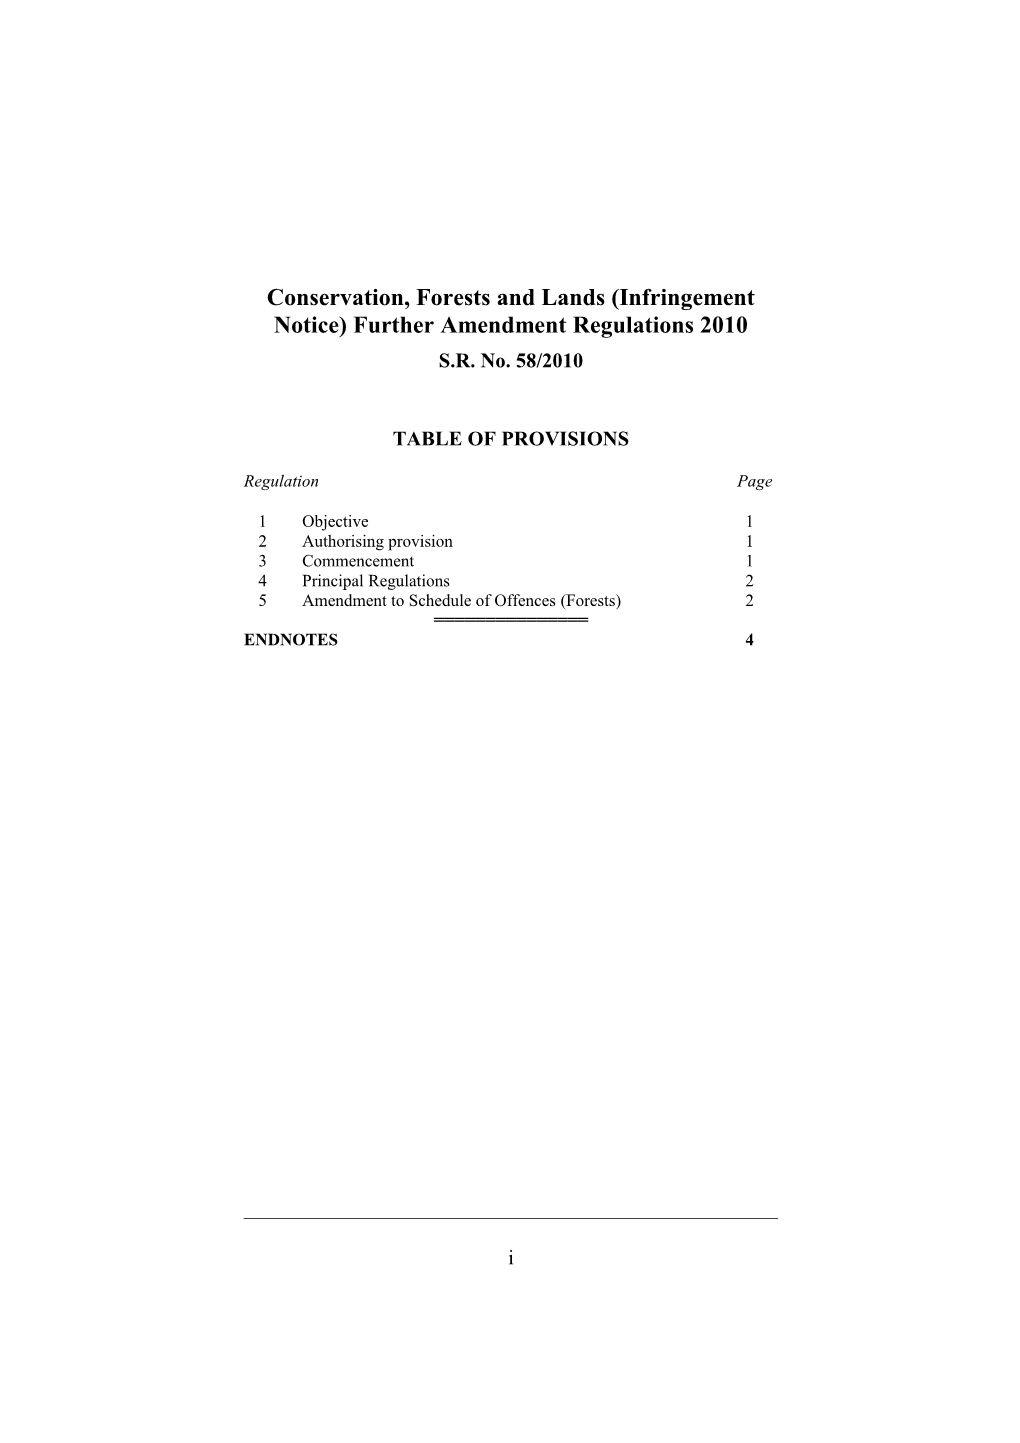 Conservation, Forests and Lands (Infringement Notice) Further Amendment Regulations 2010